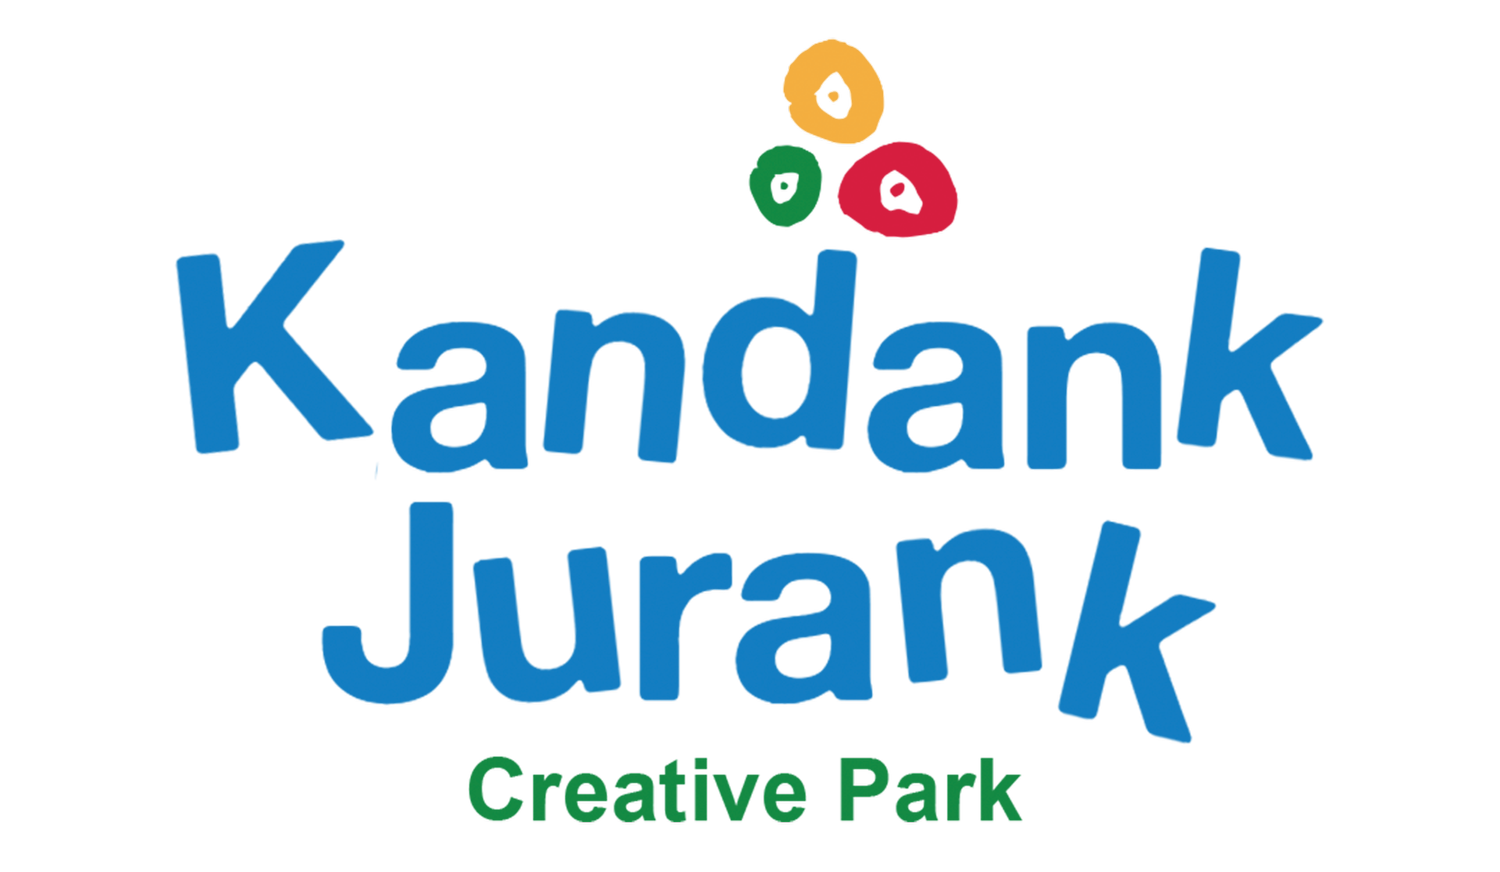 Kandank Jurank Creative Park